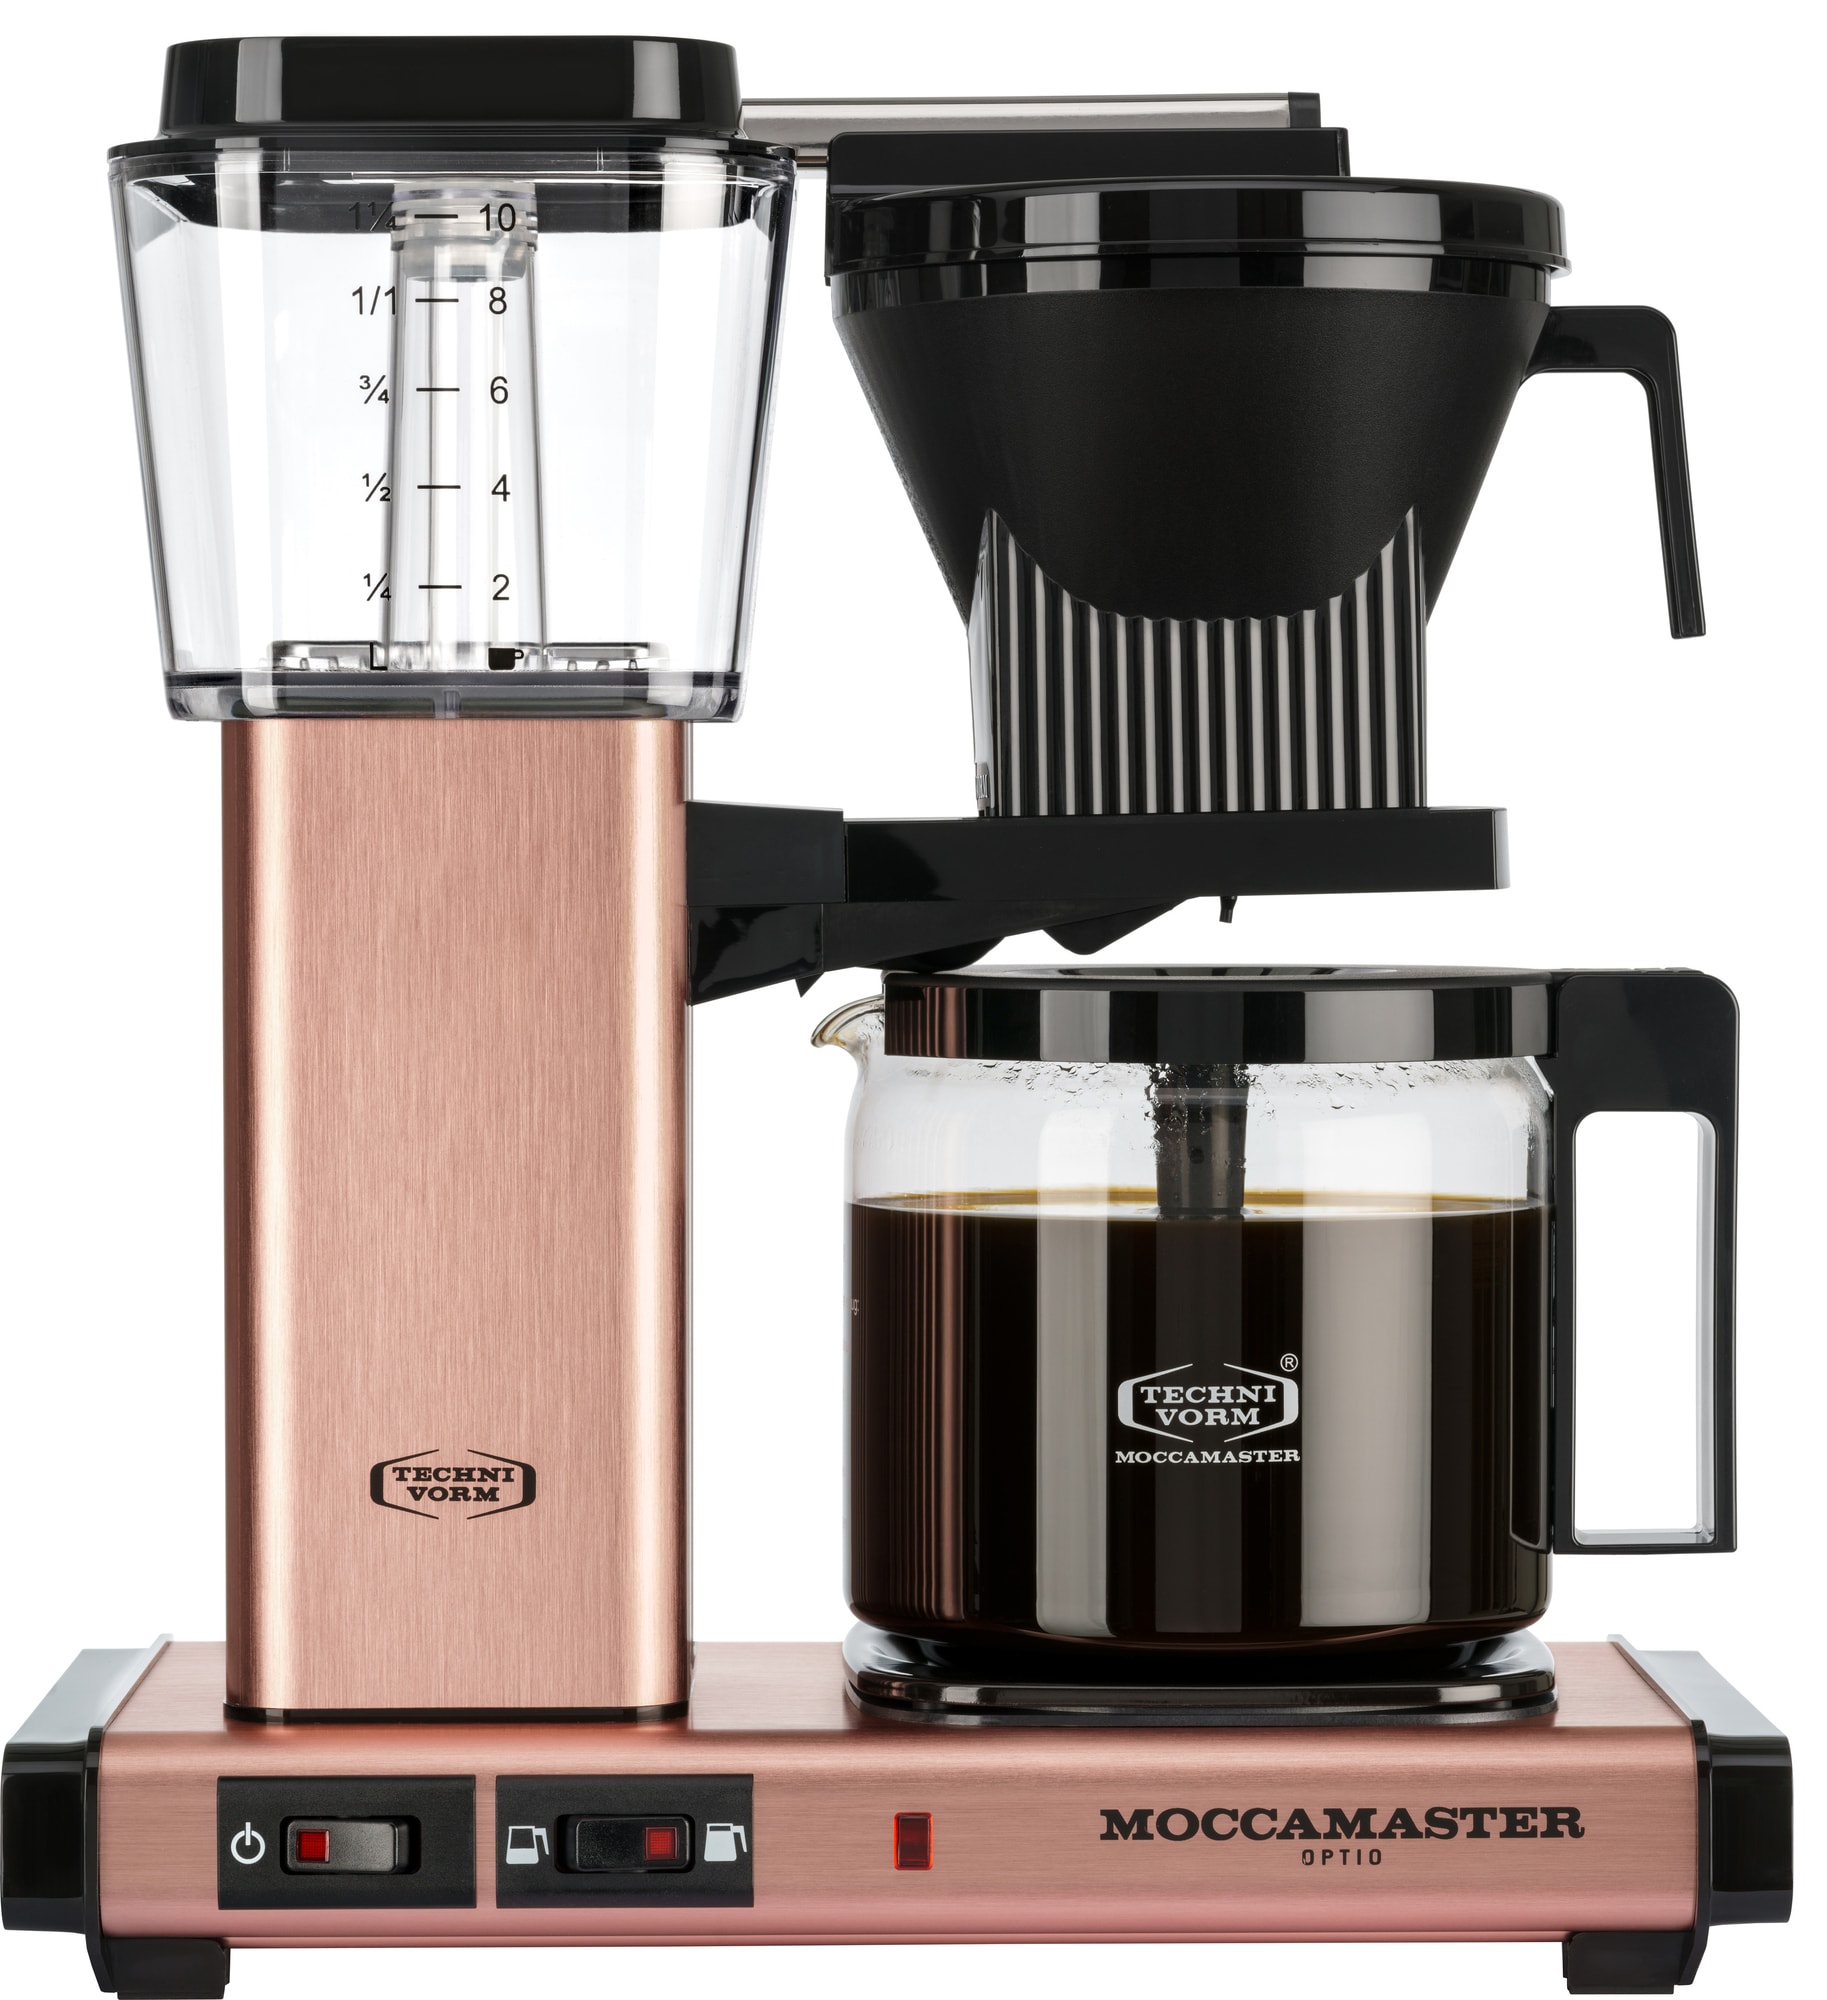 Moccamaster Optio kaffebryggare MOC53915 (rose guld) - Elgiganten